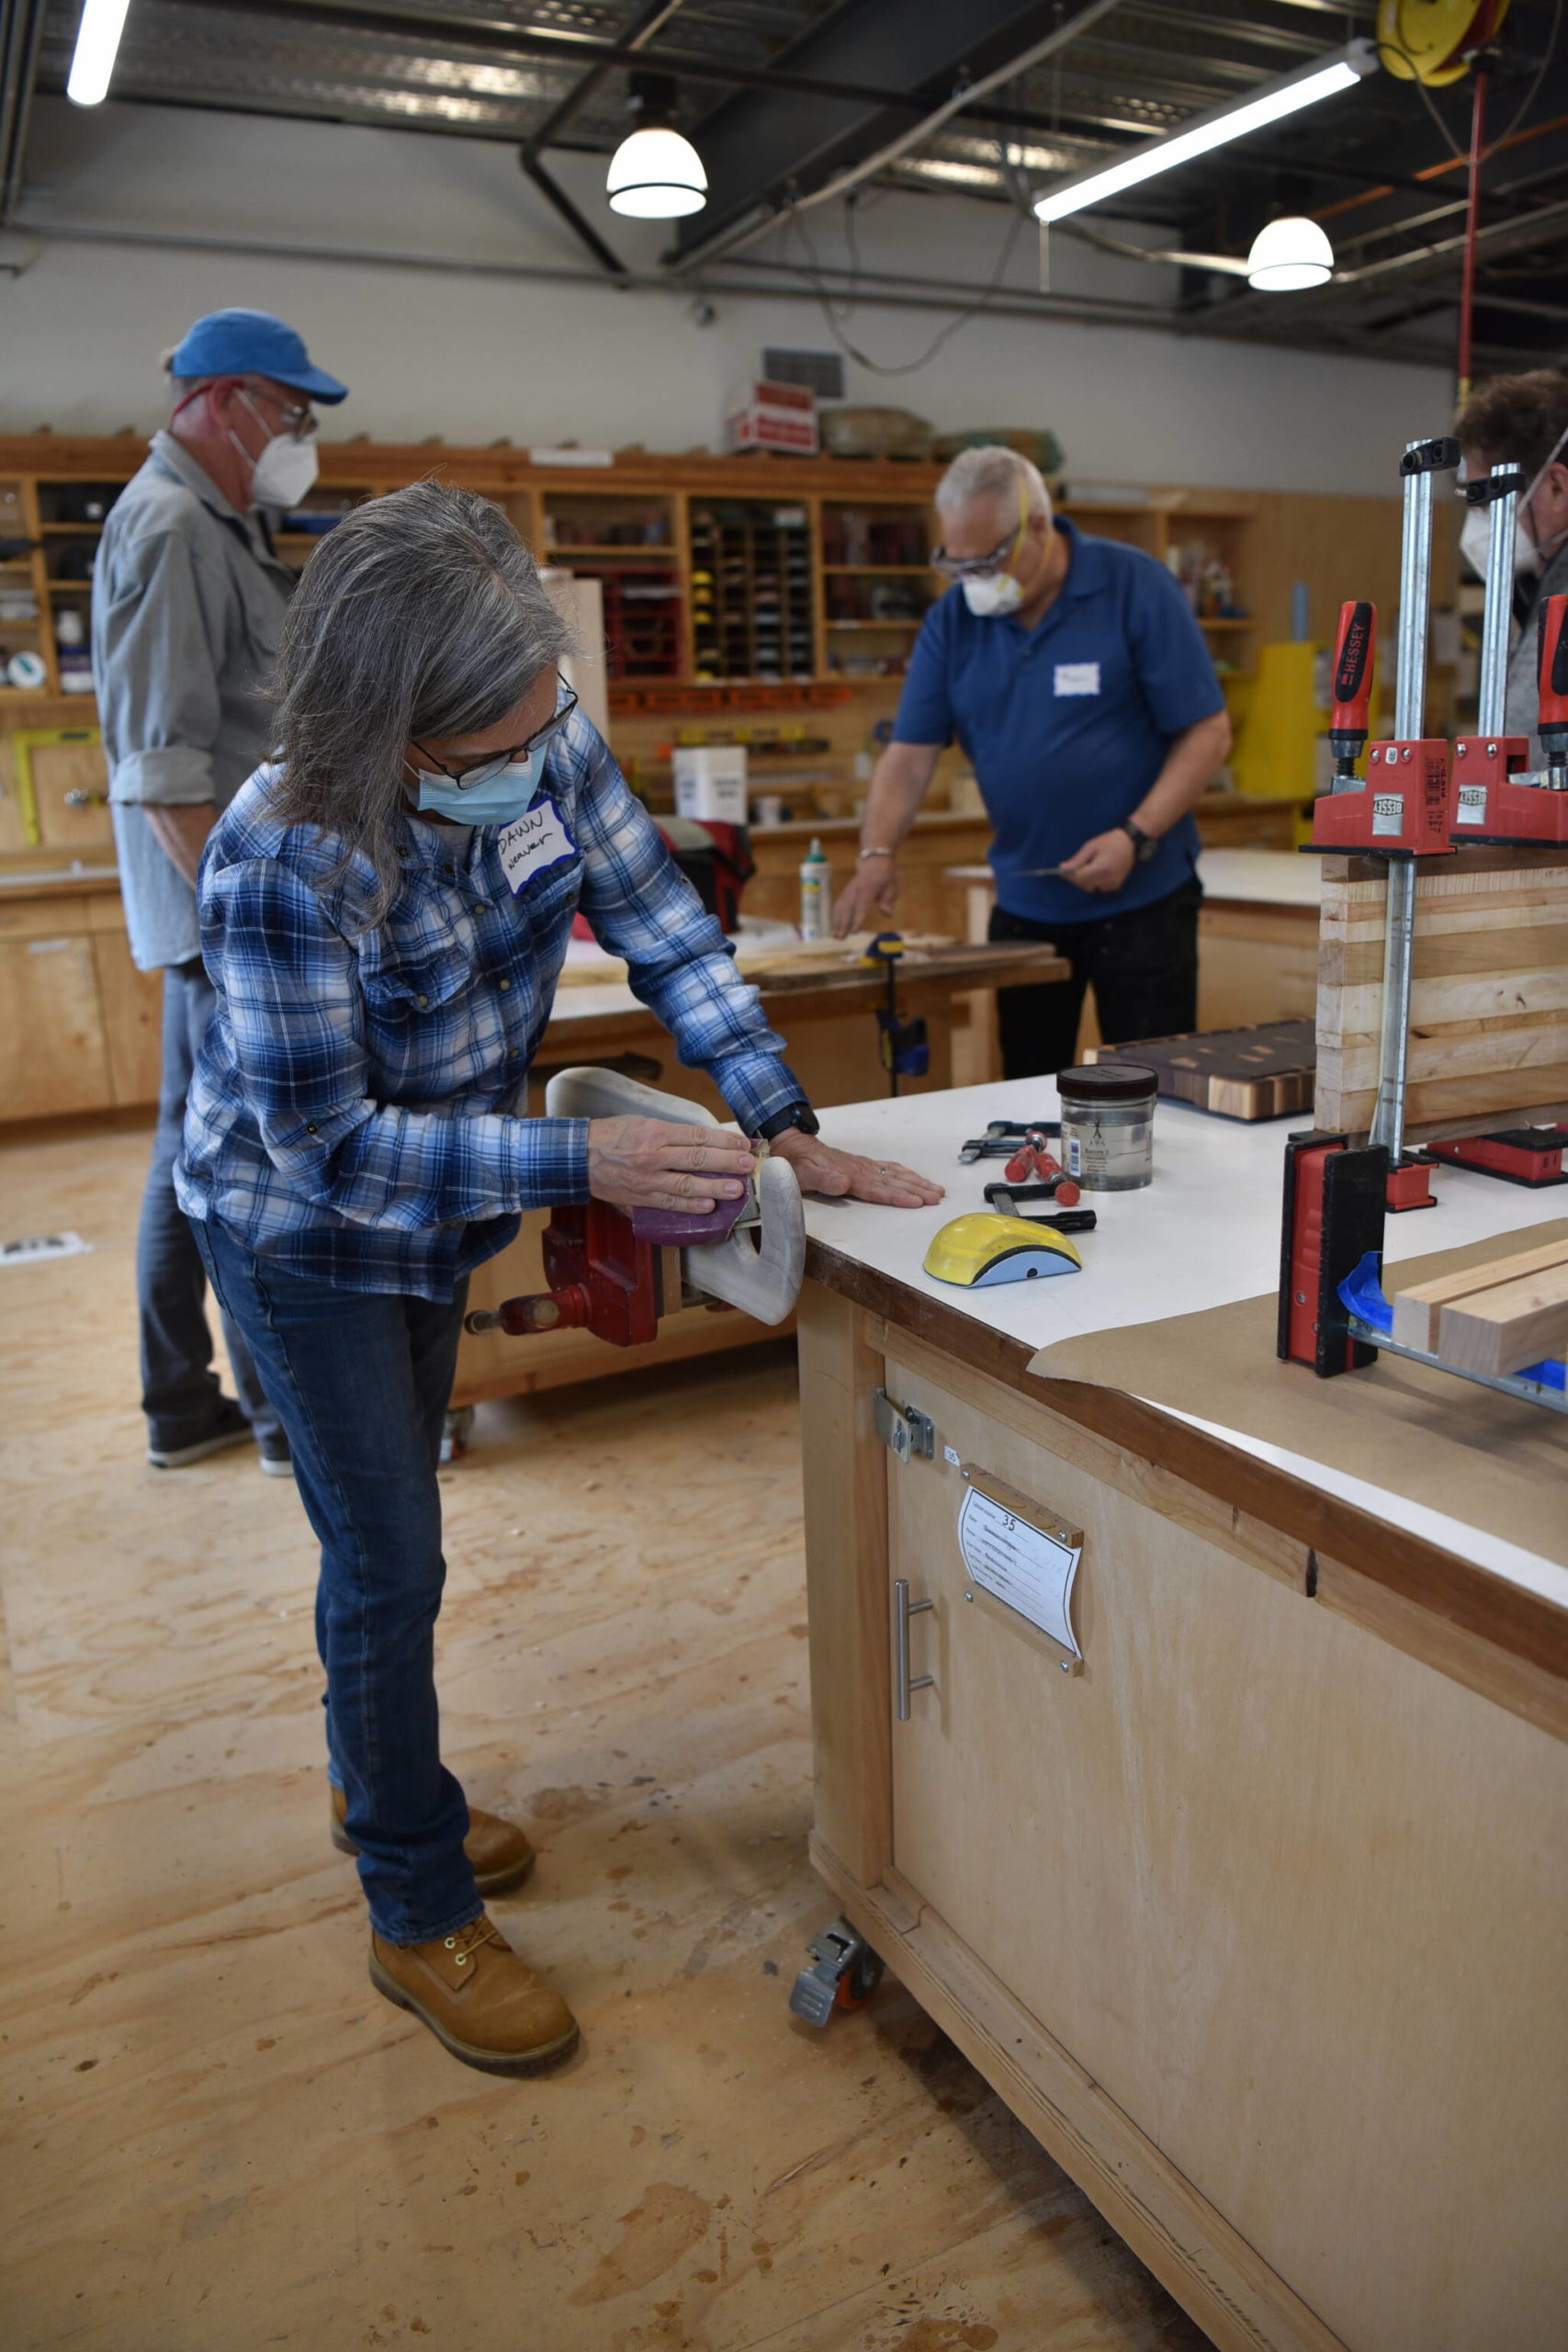 Dawn Weaver sands a cutting board in the woodworking studio.